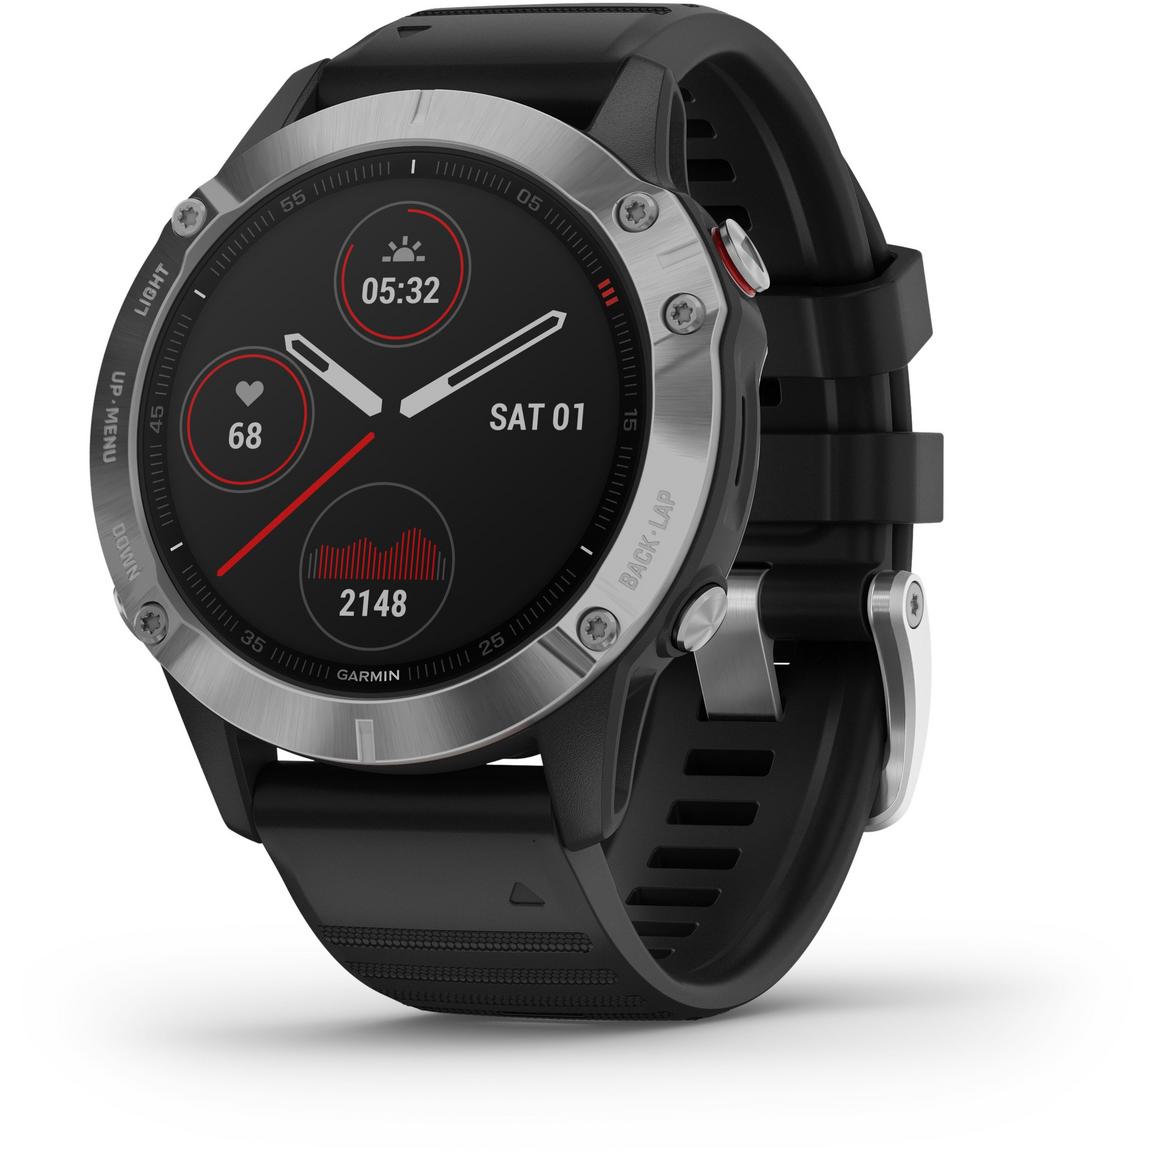 Garmin Fenix 6 Smartwatch on sale for $249.97